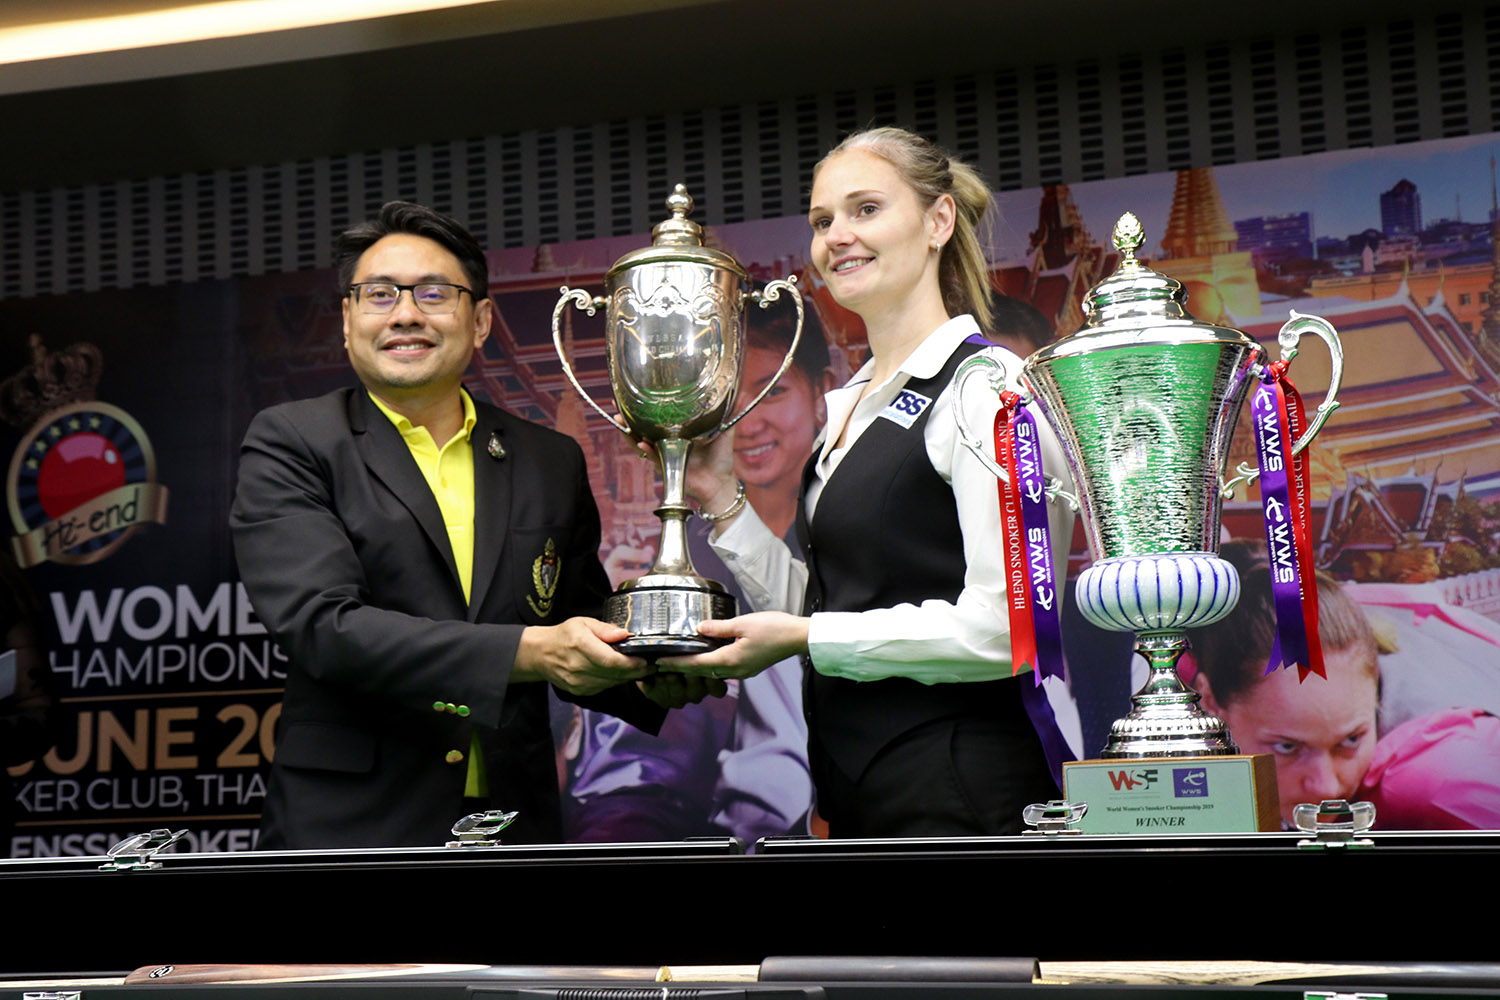 Sheffield to Host 2022 World Womens Snooker Championship